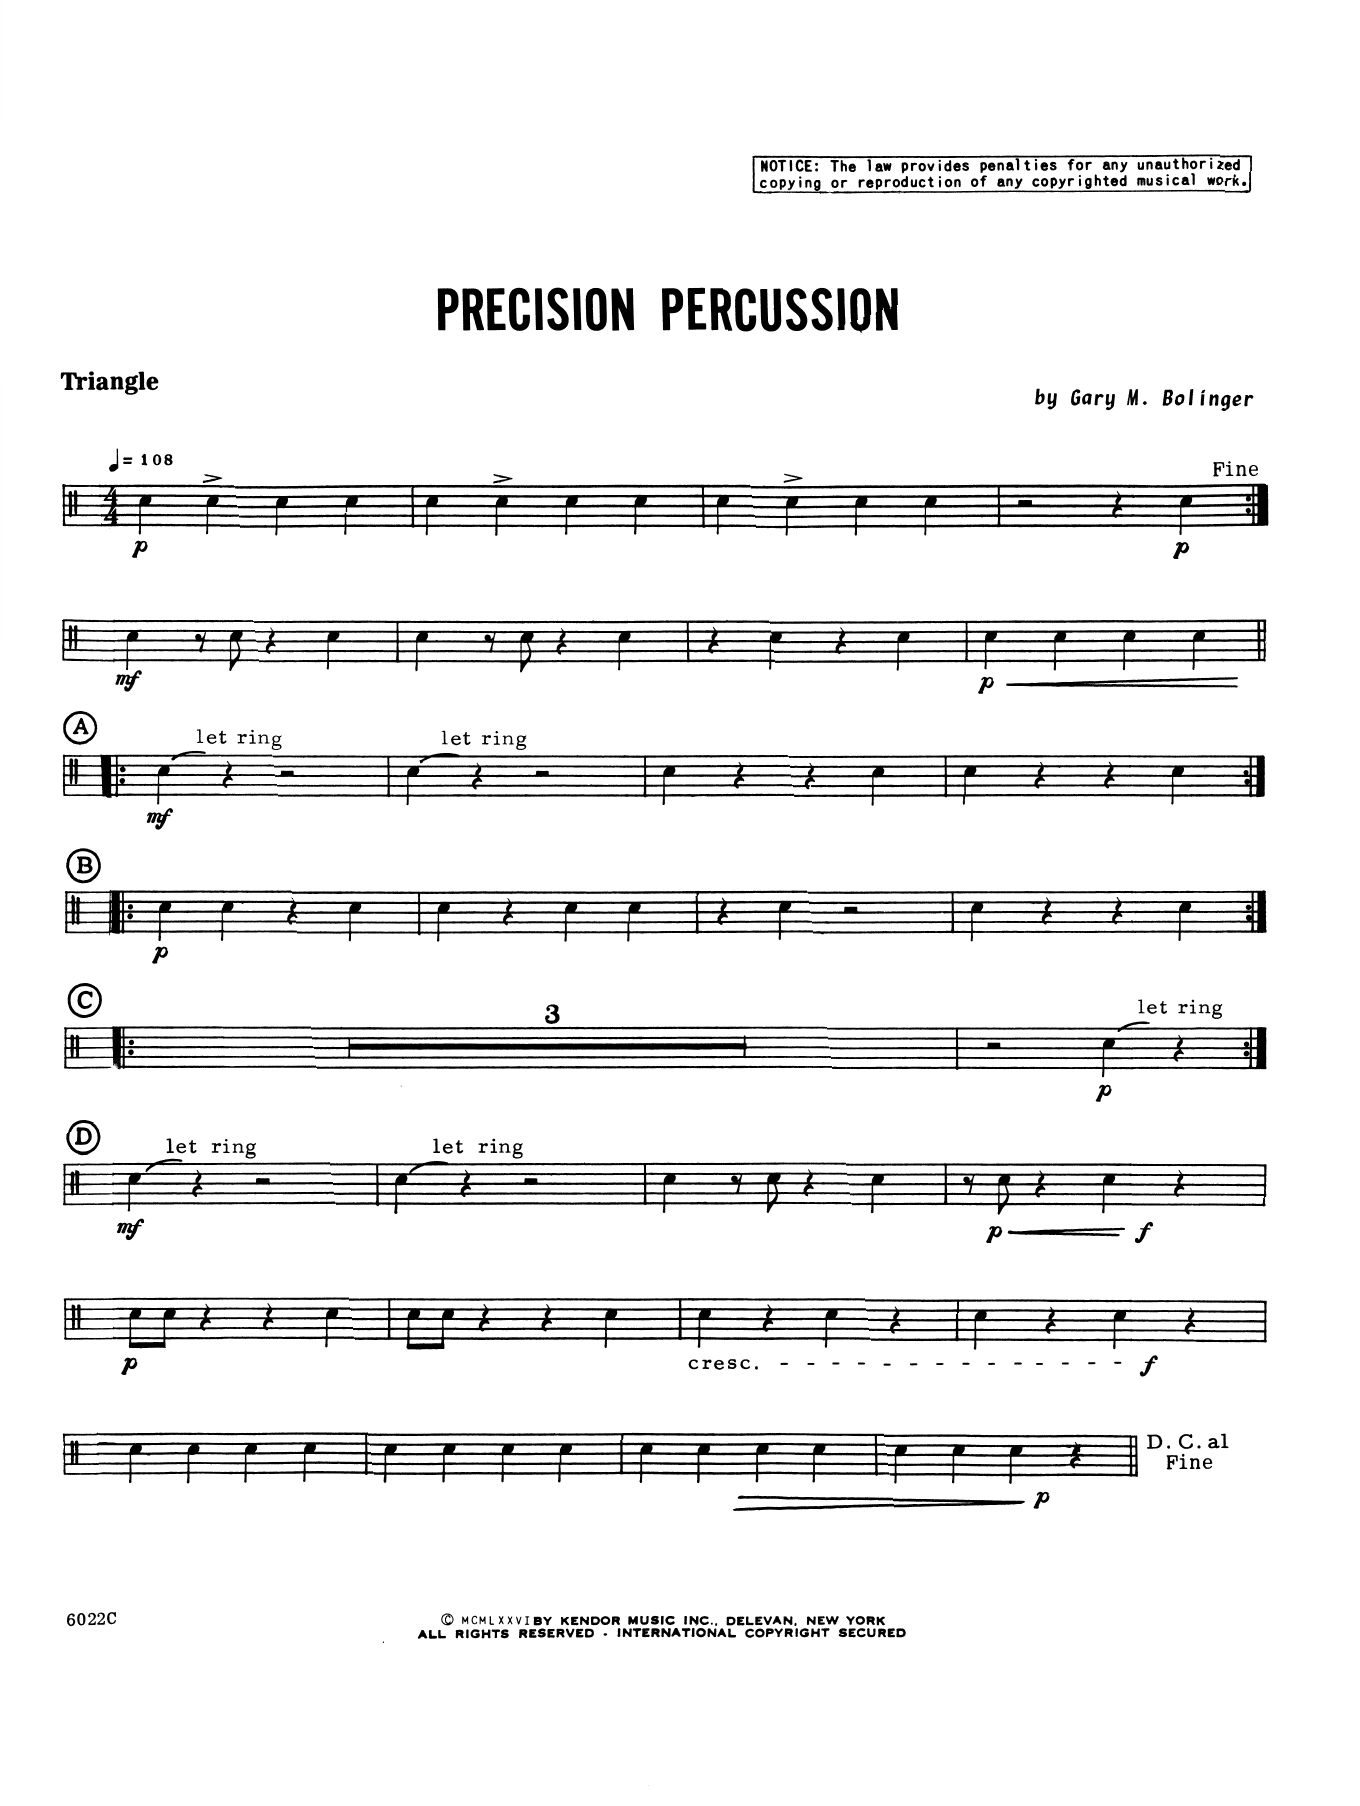 Download Gary M. Bolinger Precision Percussion - Percussion 2 Sheet Music